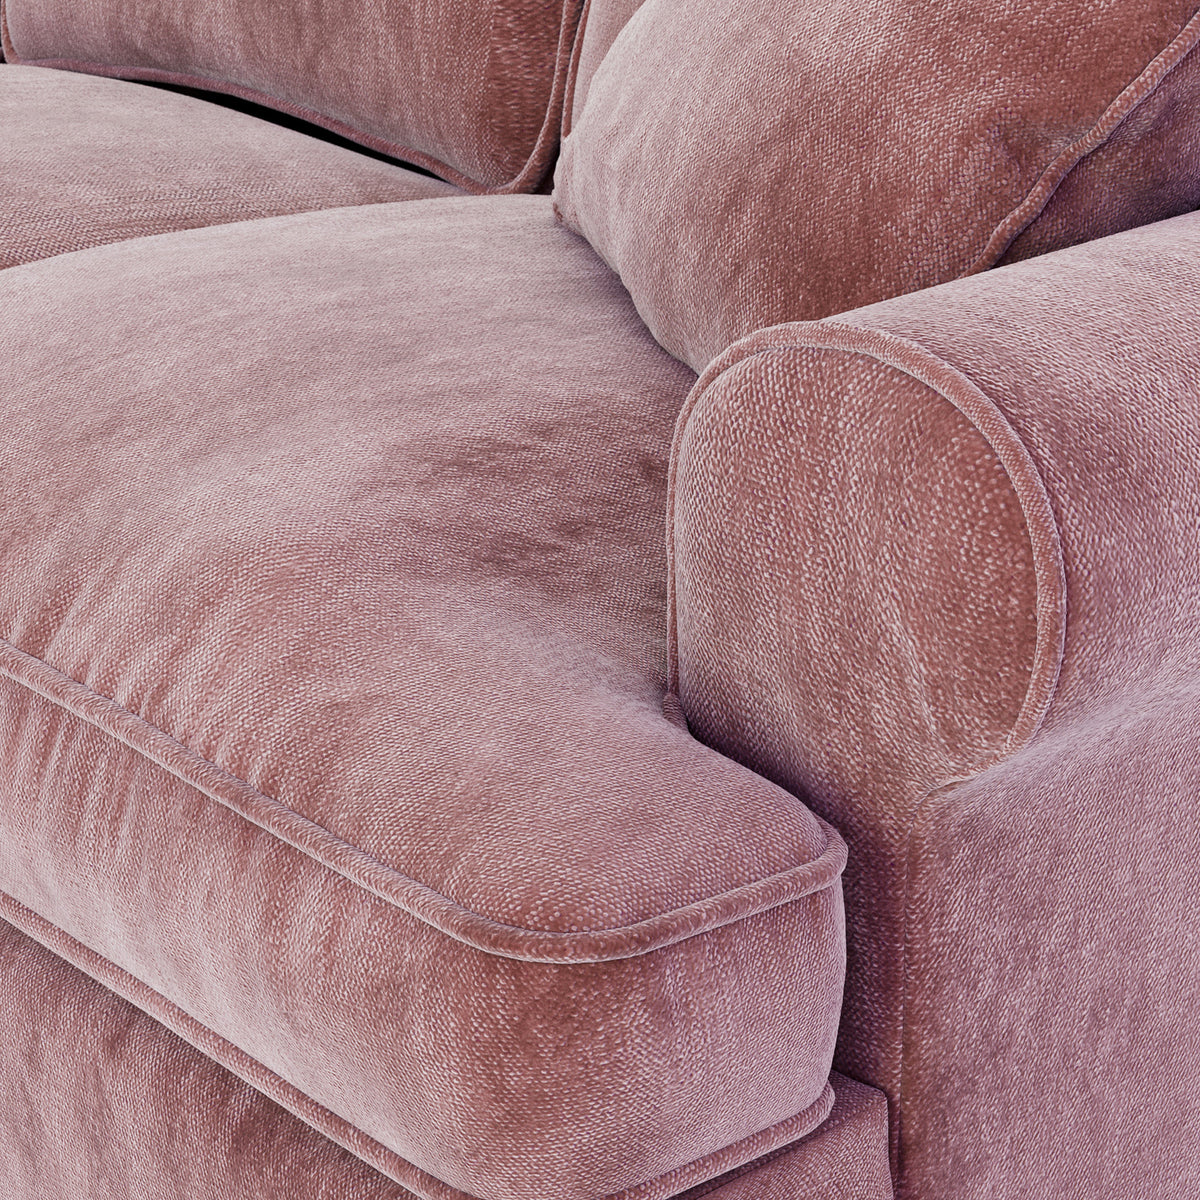 Alfie Blush Pink 3 Seater Sofa from Roseland Furniture